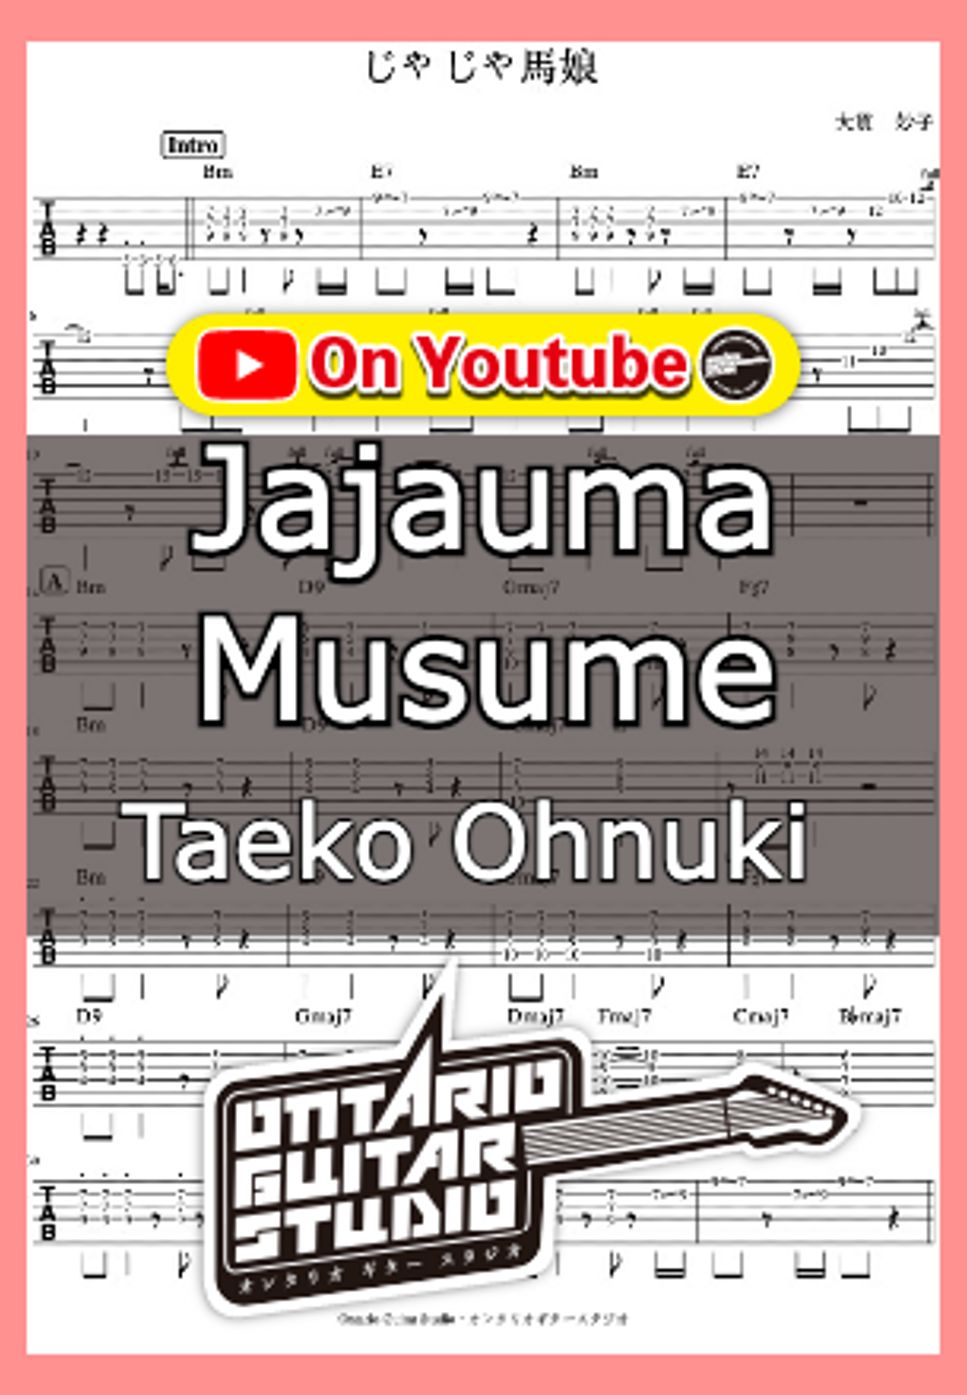 Taeko Ohnuki - Jajauma Musume by Ontario Guitar Studio